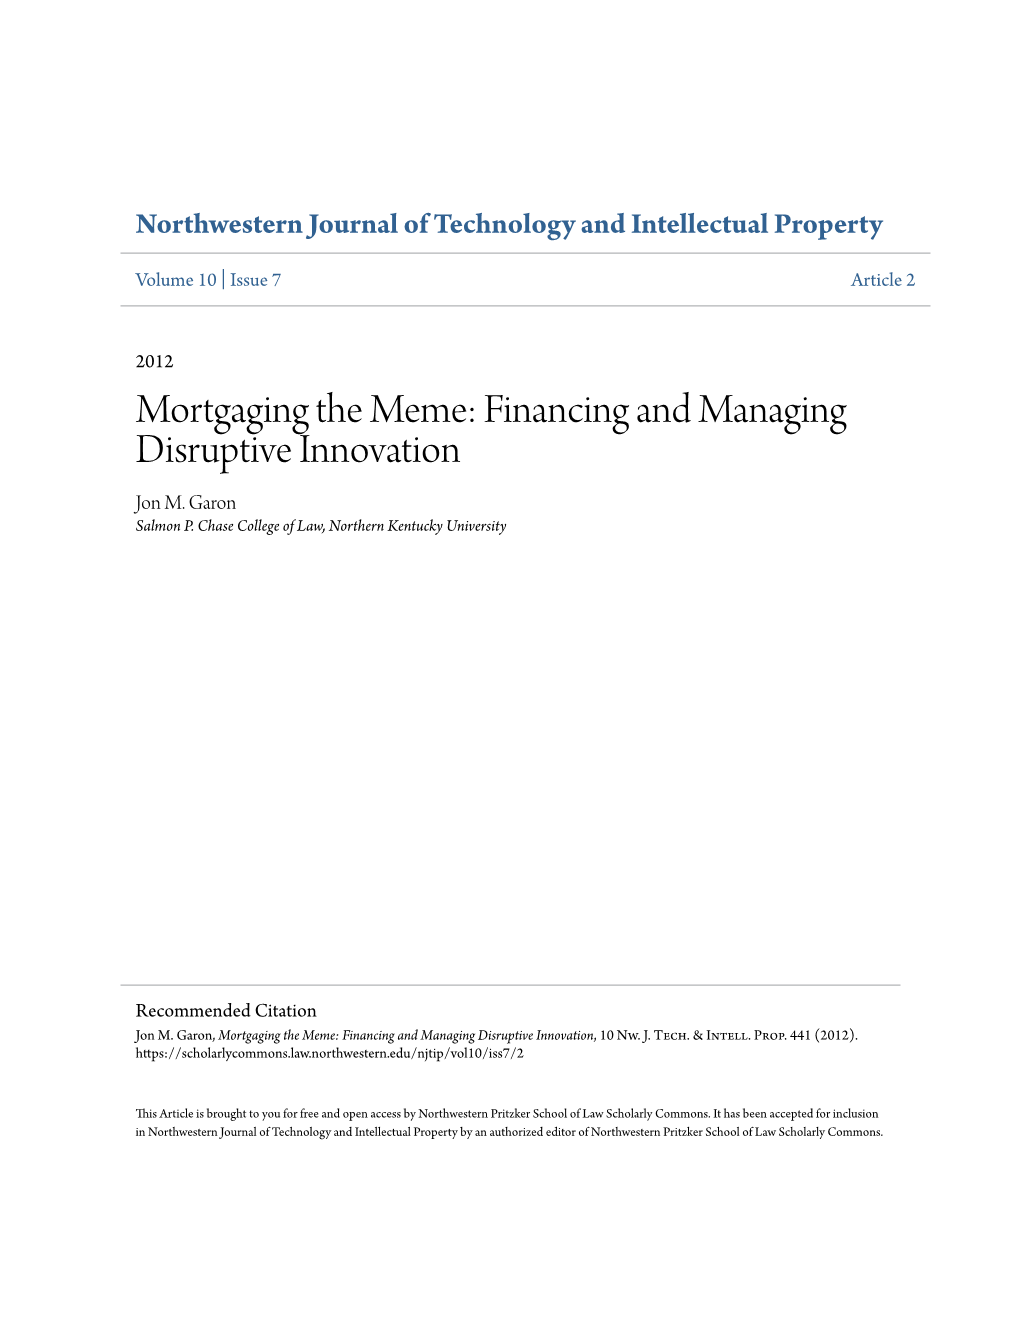 Mortgaging the Meme: Financing and Managing Disruptive Innovation Jon M